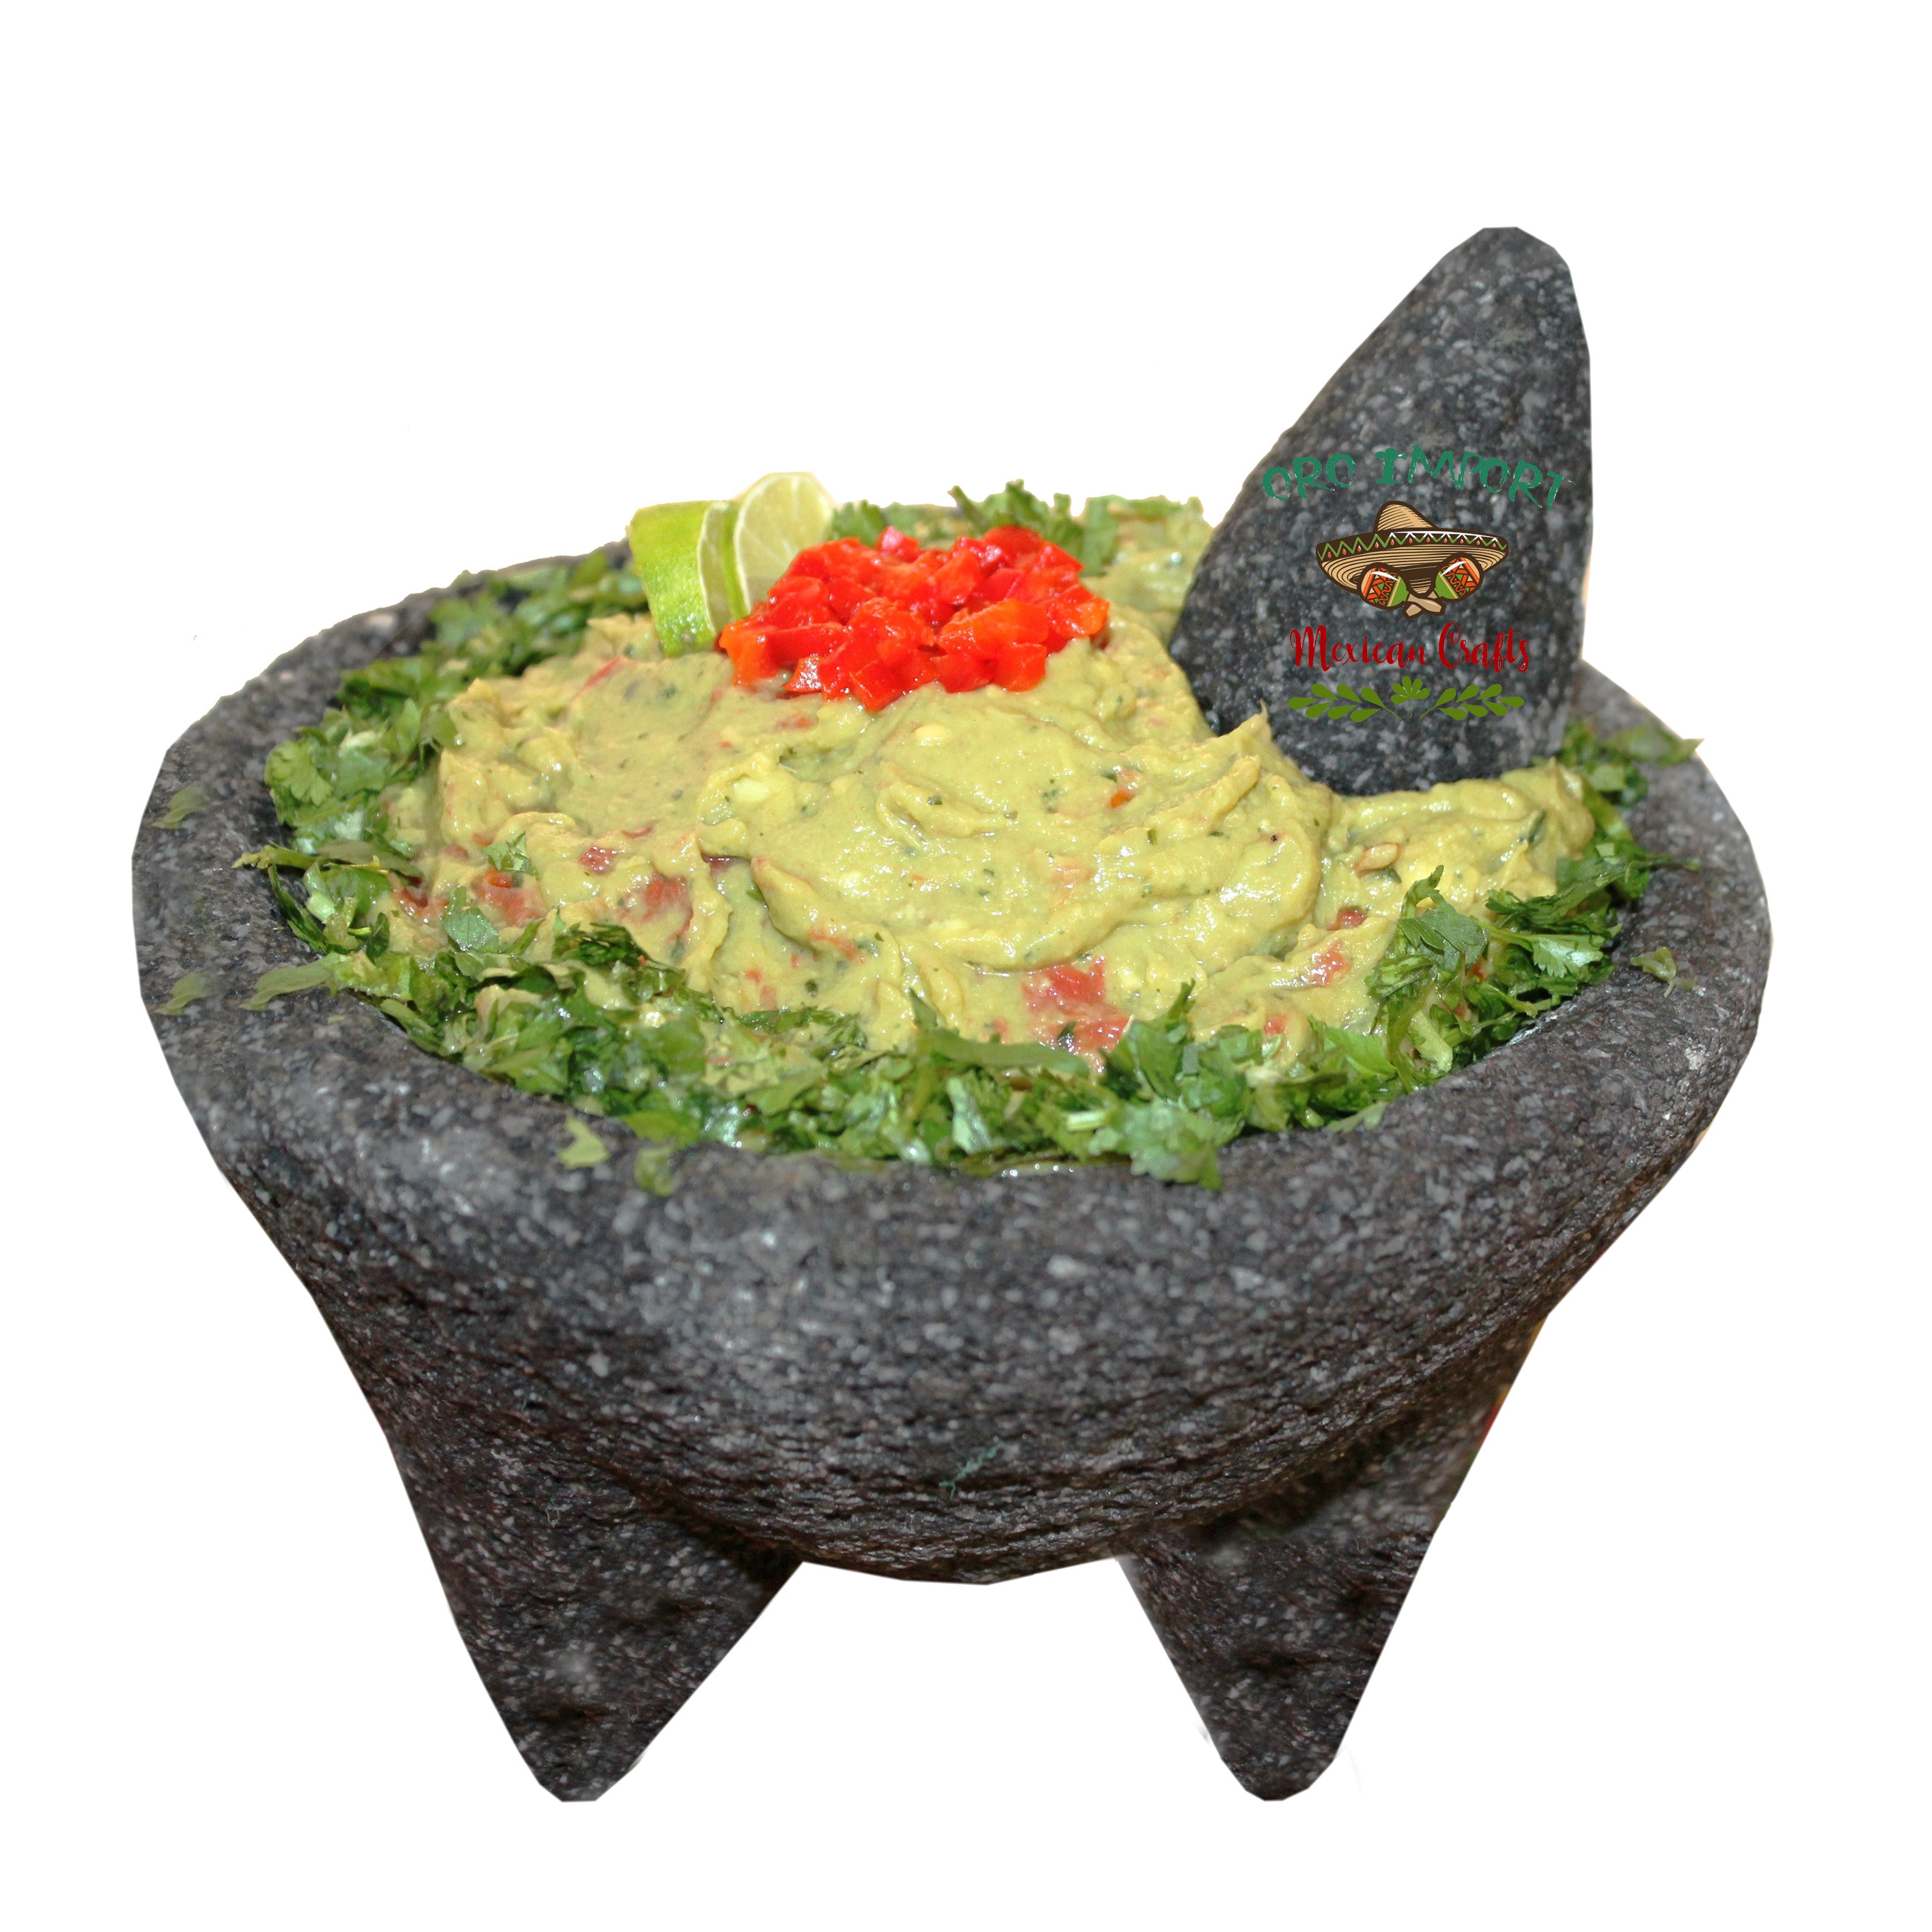  The original Molcajete Mexicano volcanic rock Handmade of  Authentic Lava Rock in Mexico - Molcajete de Piedra volcanica - Molcajete  Mortar Pestle molcajete bowl molcajete volcanic rock guacamole maker: Home 